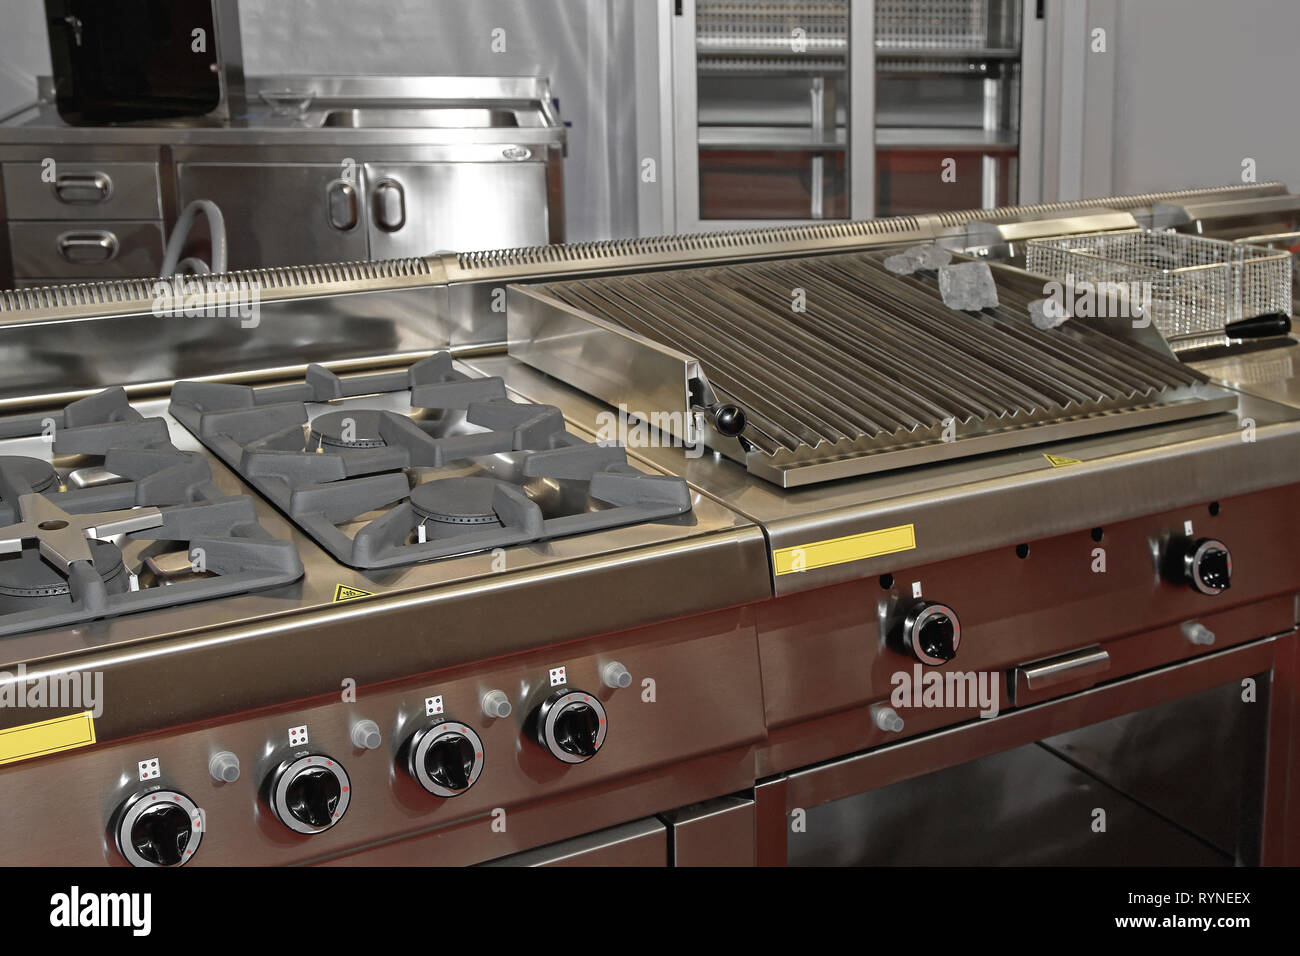 https://c8.alamy.com/comp/RYNEEX/gas-hob-stove-and-grill-in-professional-kitchen-restaurant-RYNEEX.jpg